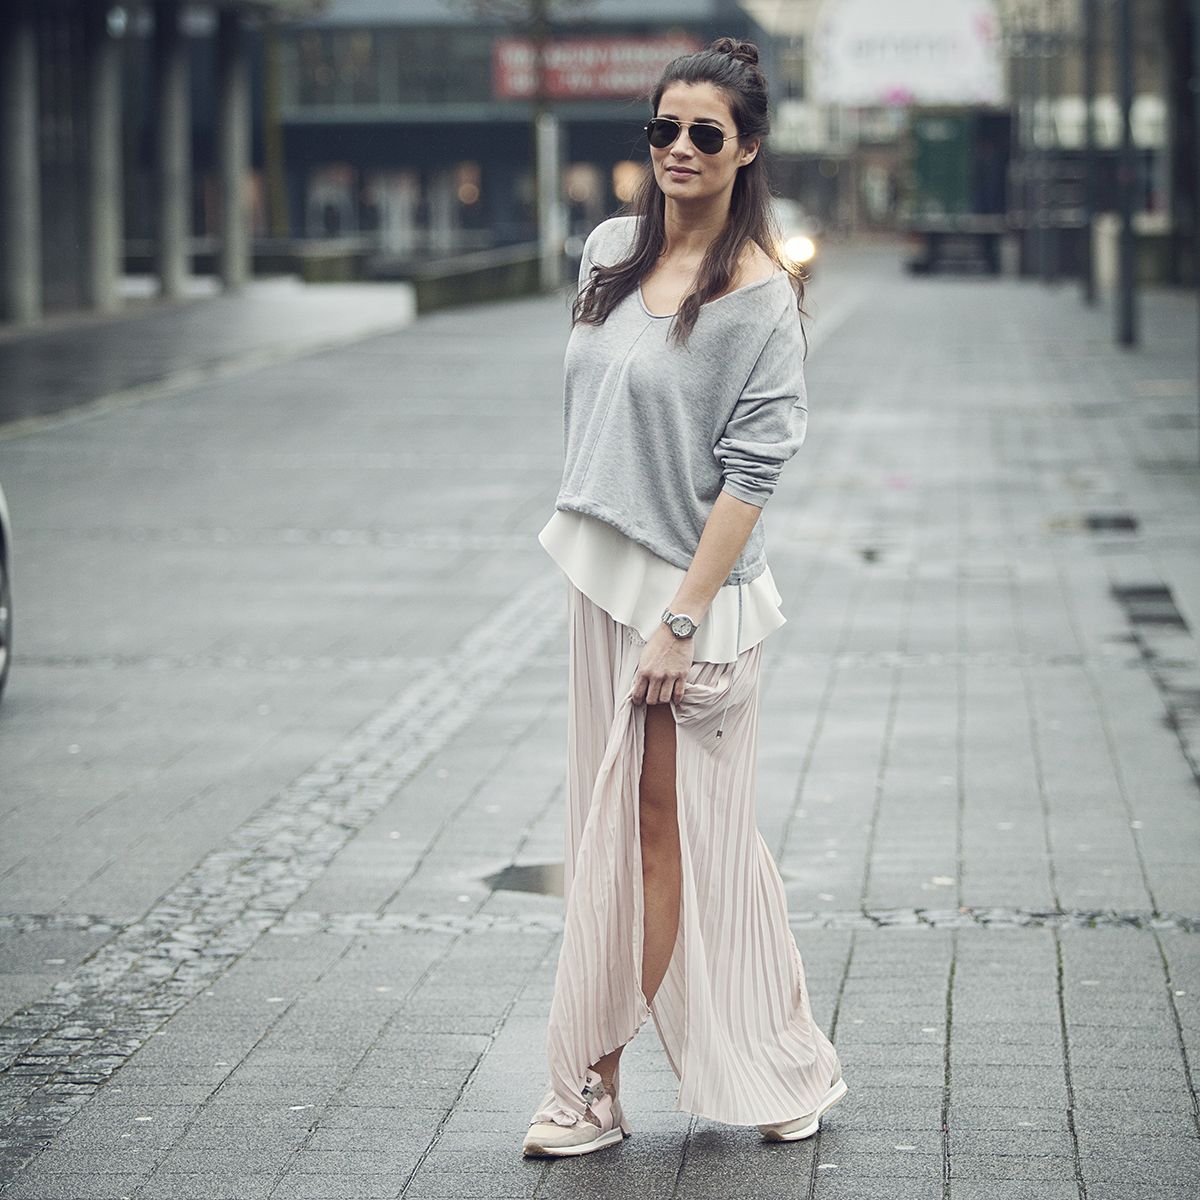 streetstyle 2015 philipp model maxi skirt top knot BlogForshops